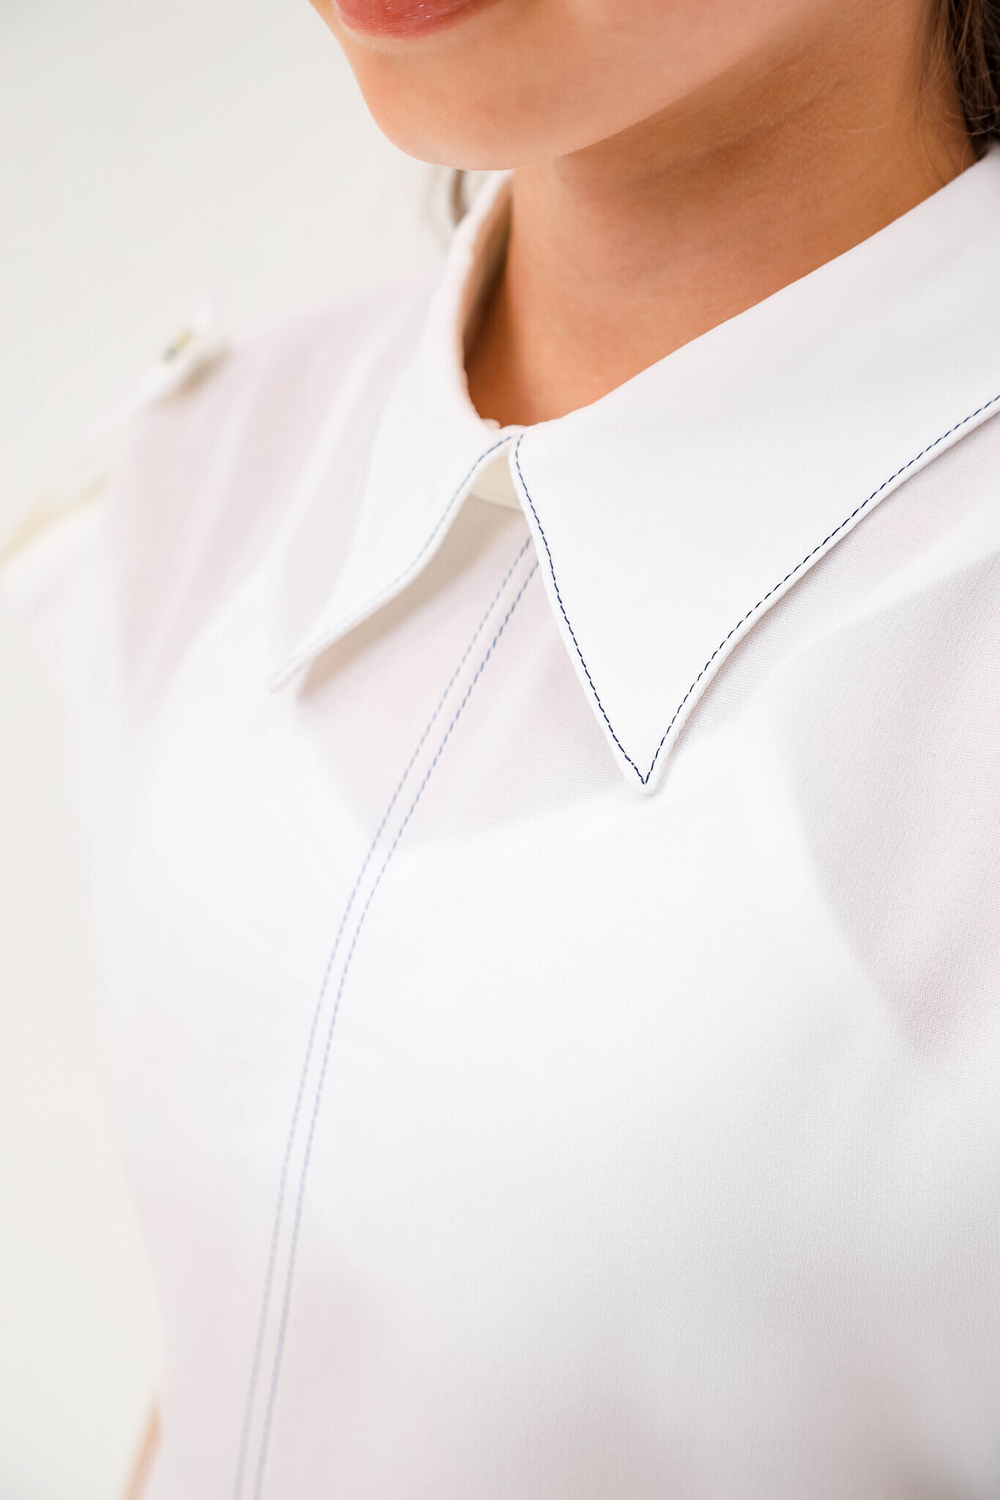 Блуза с коротким рукавом для девочки DELORAS C63112S